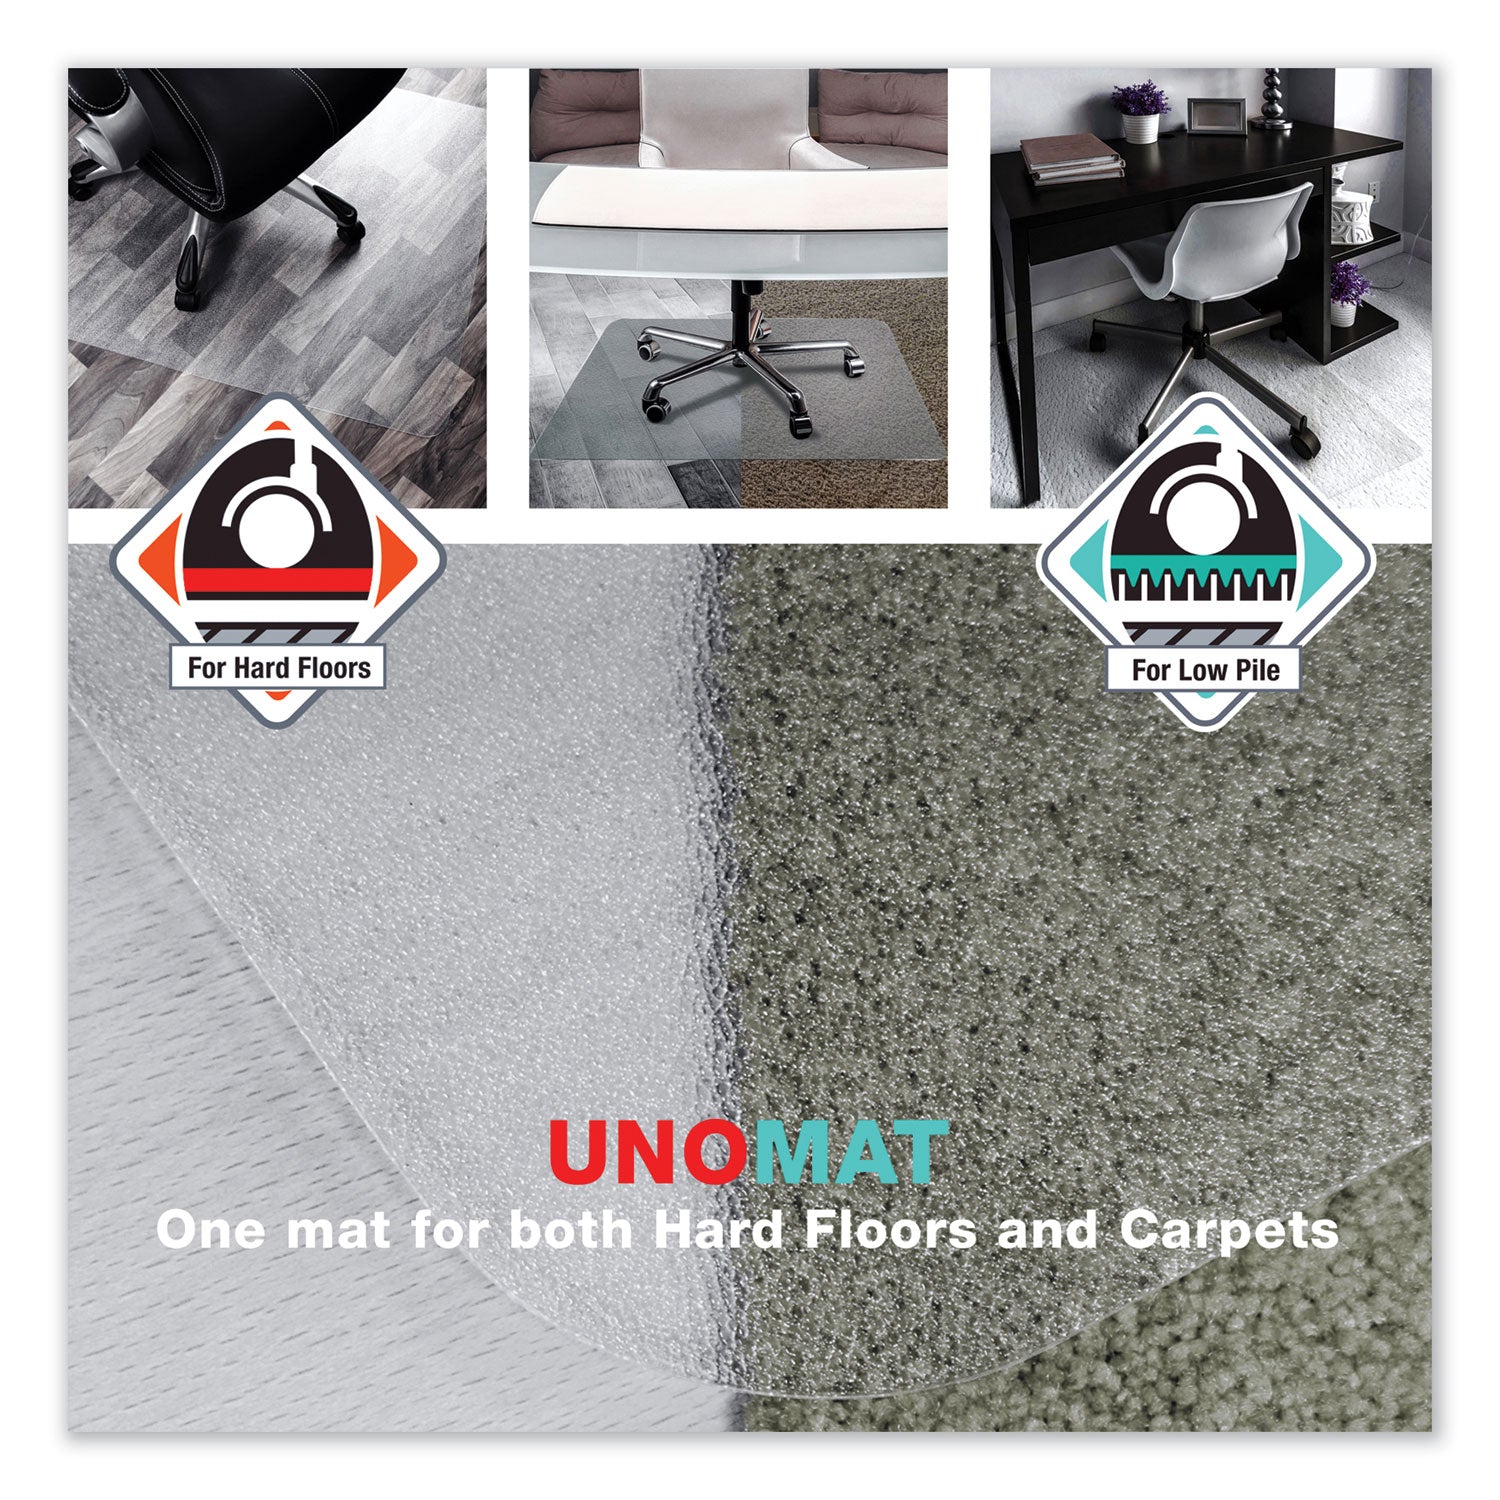 cleartex-unomat-anti-slip-chair-mat-for-hard-floors-flat-pile-carpets-60-x-48-clear_flrec1215020era - 4